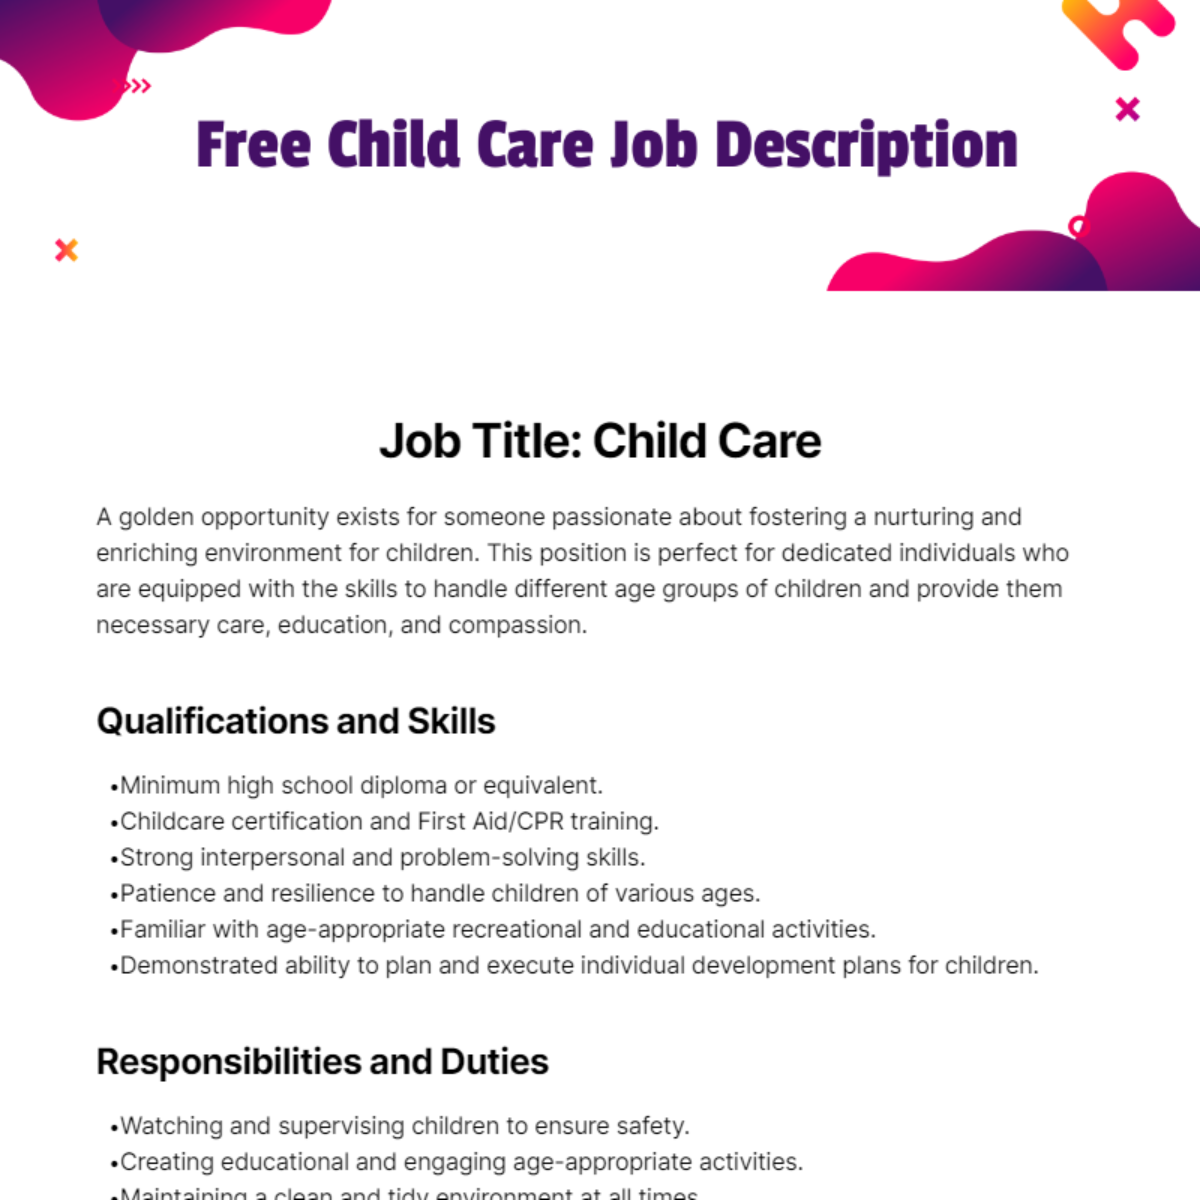 Free Child Care Job Description Template